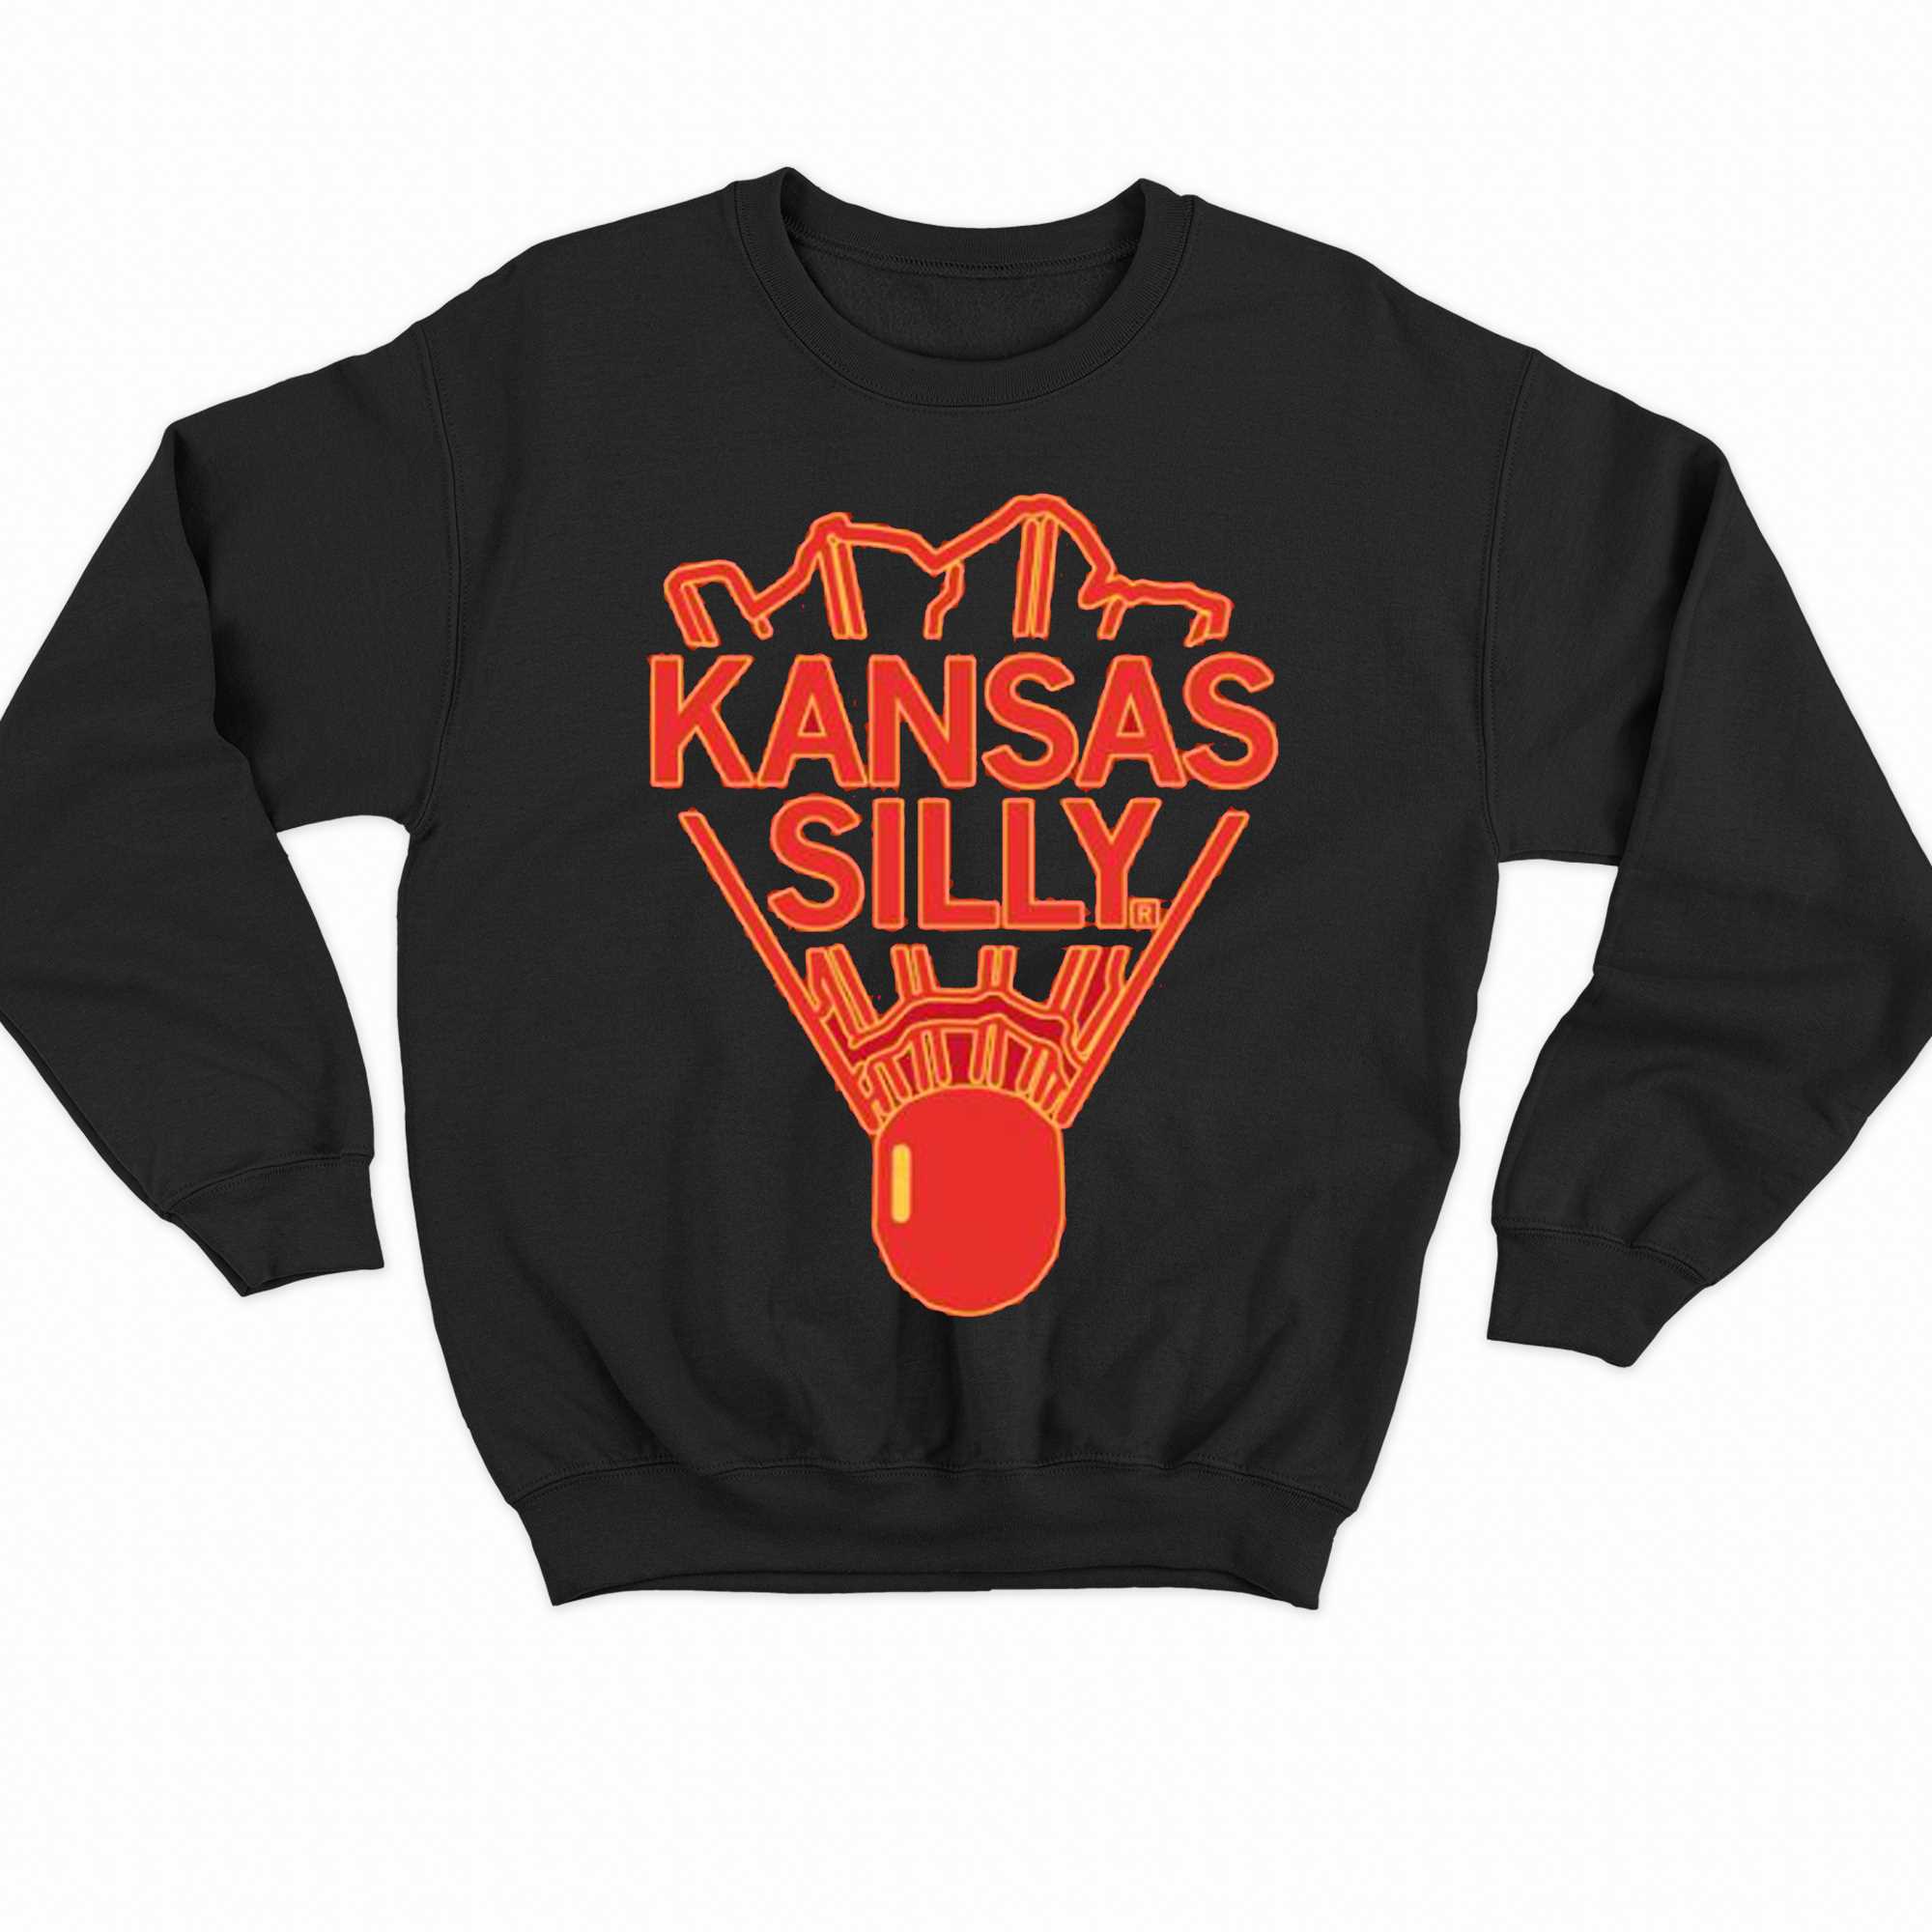 Kansas Silly Shirt 